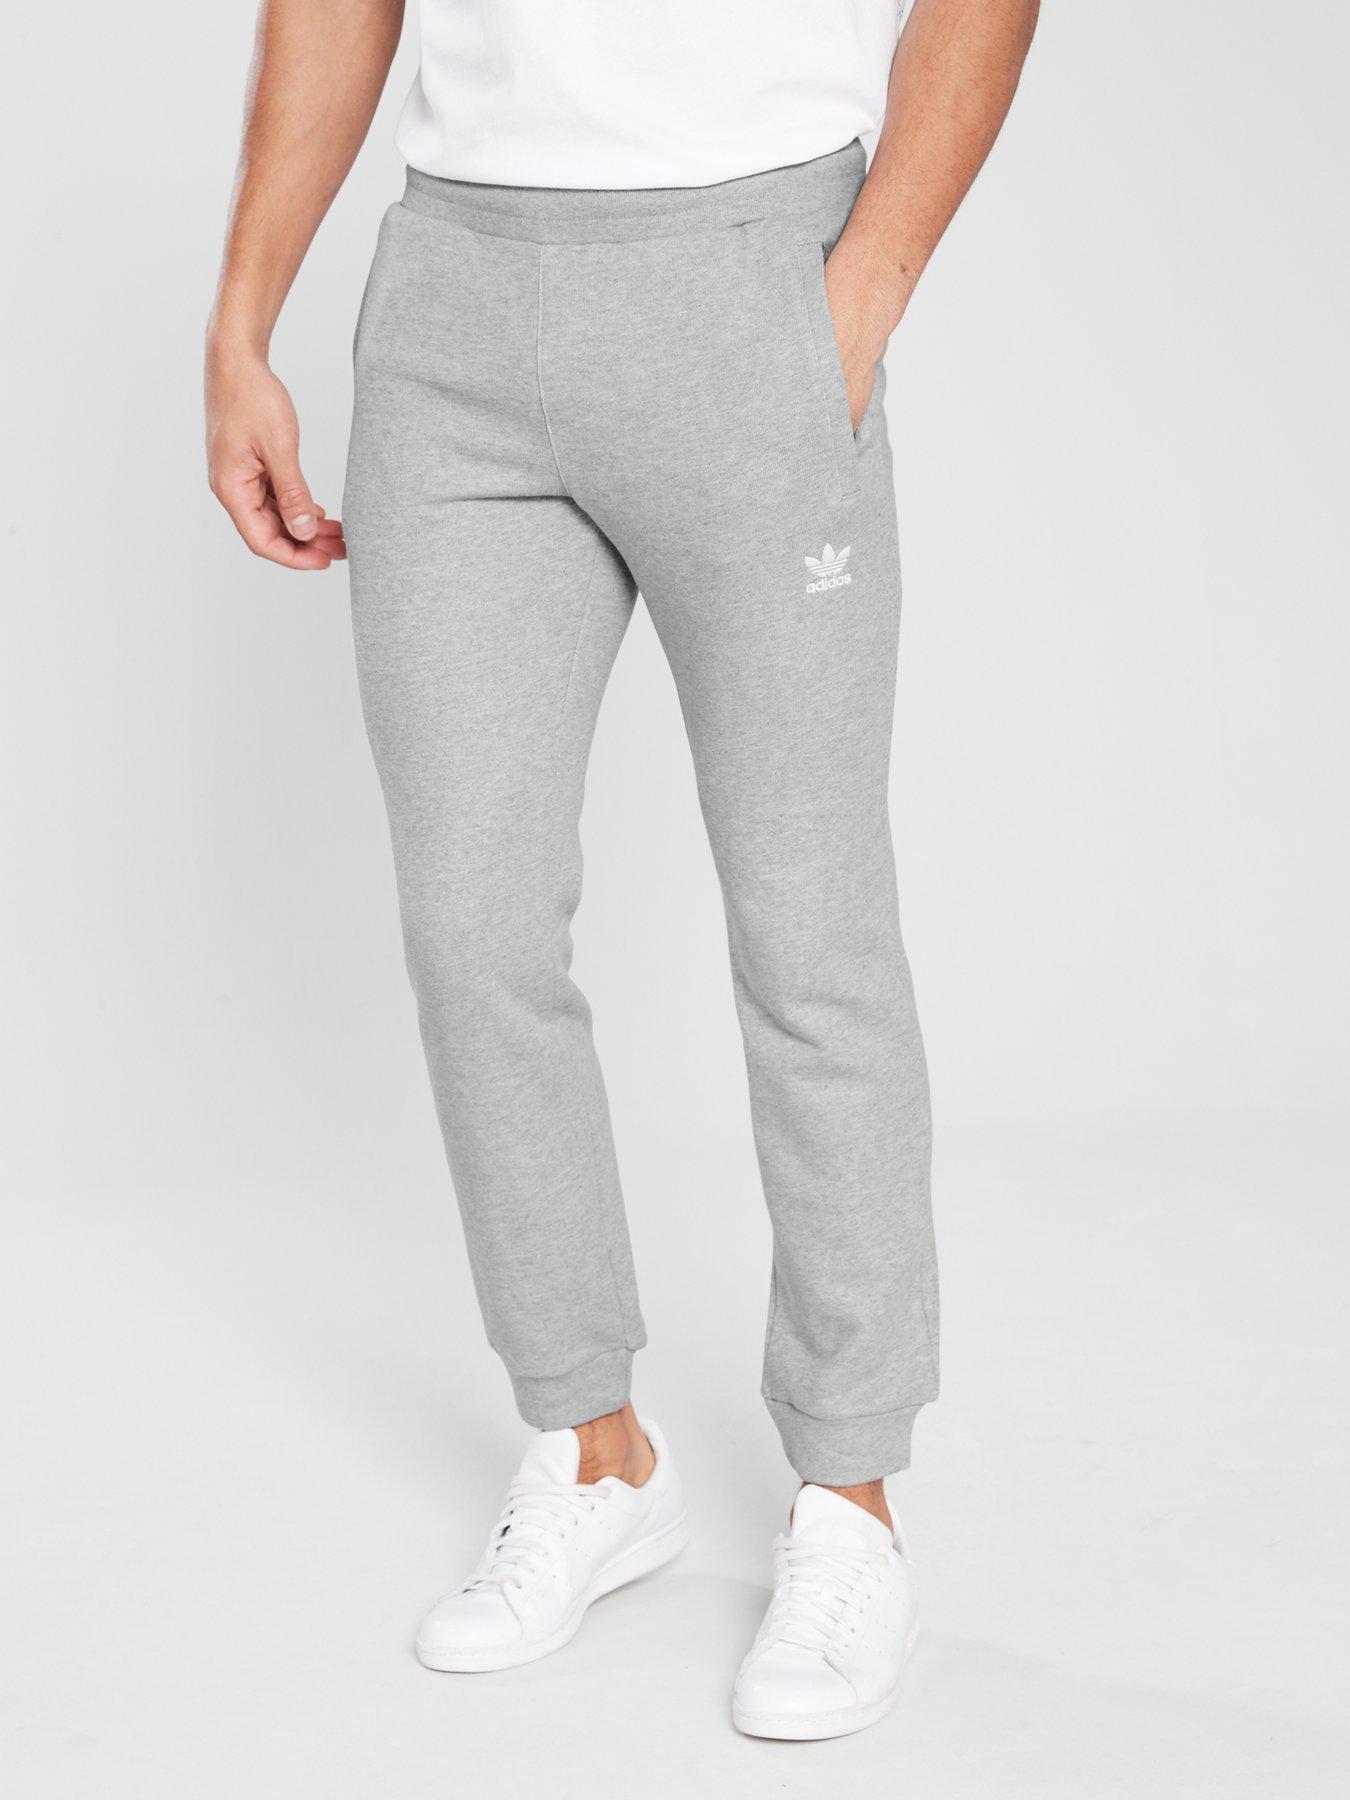 Joggers Trefoil Pants - Medium Grey